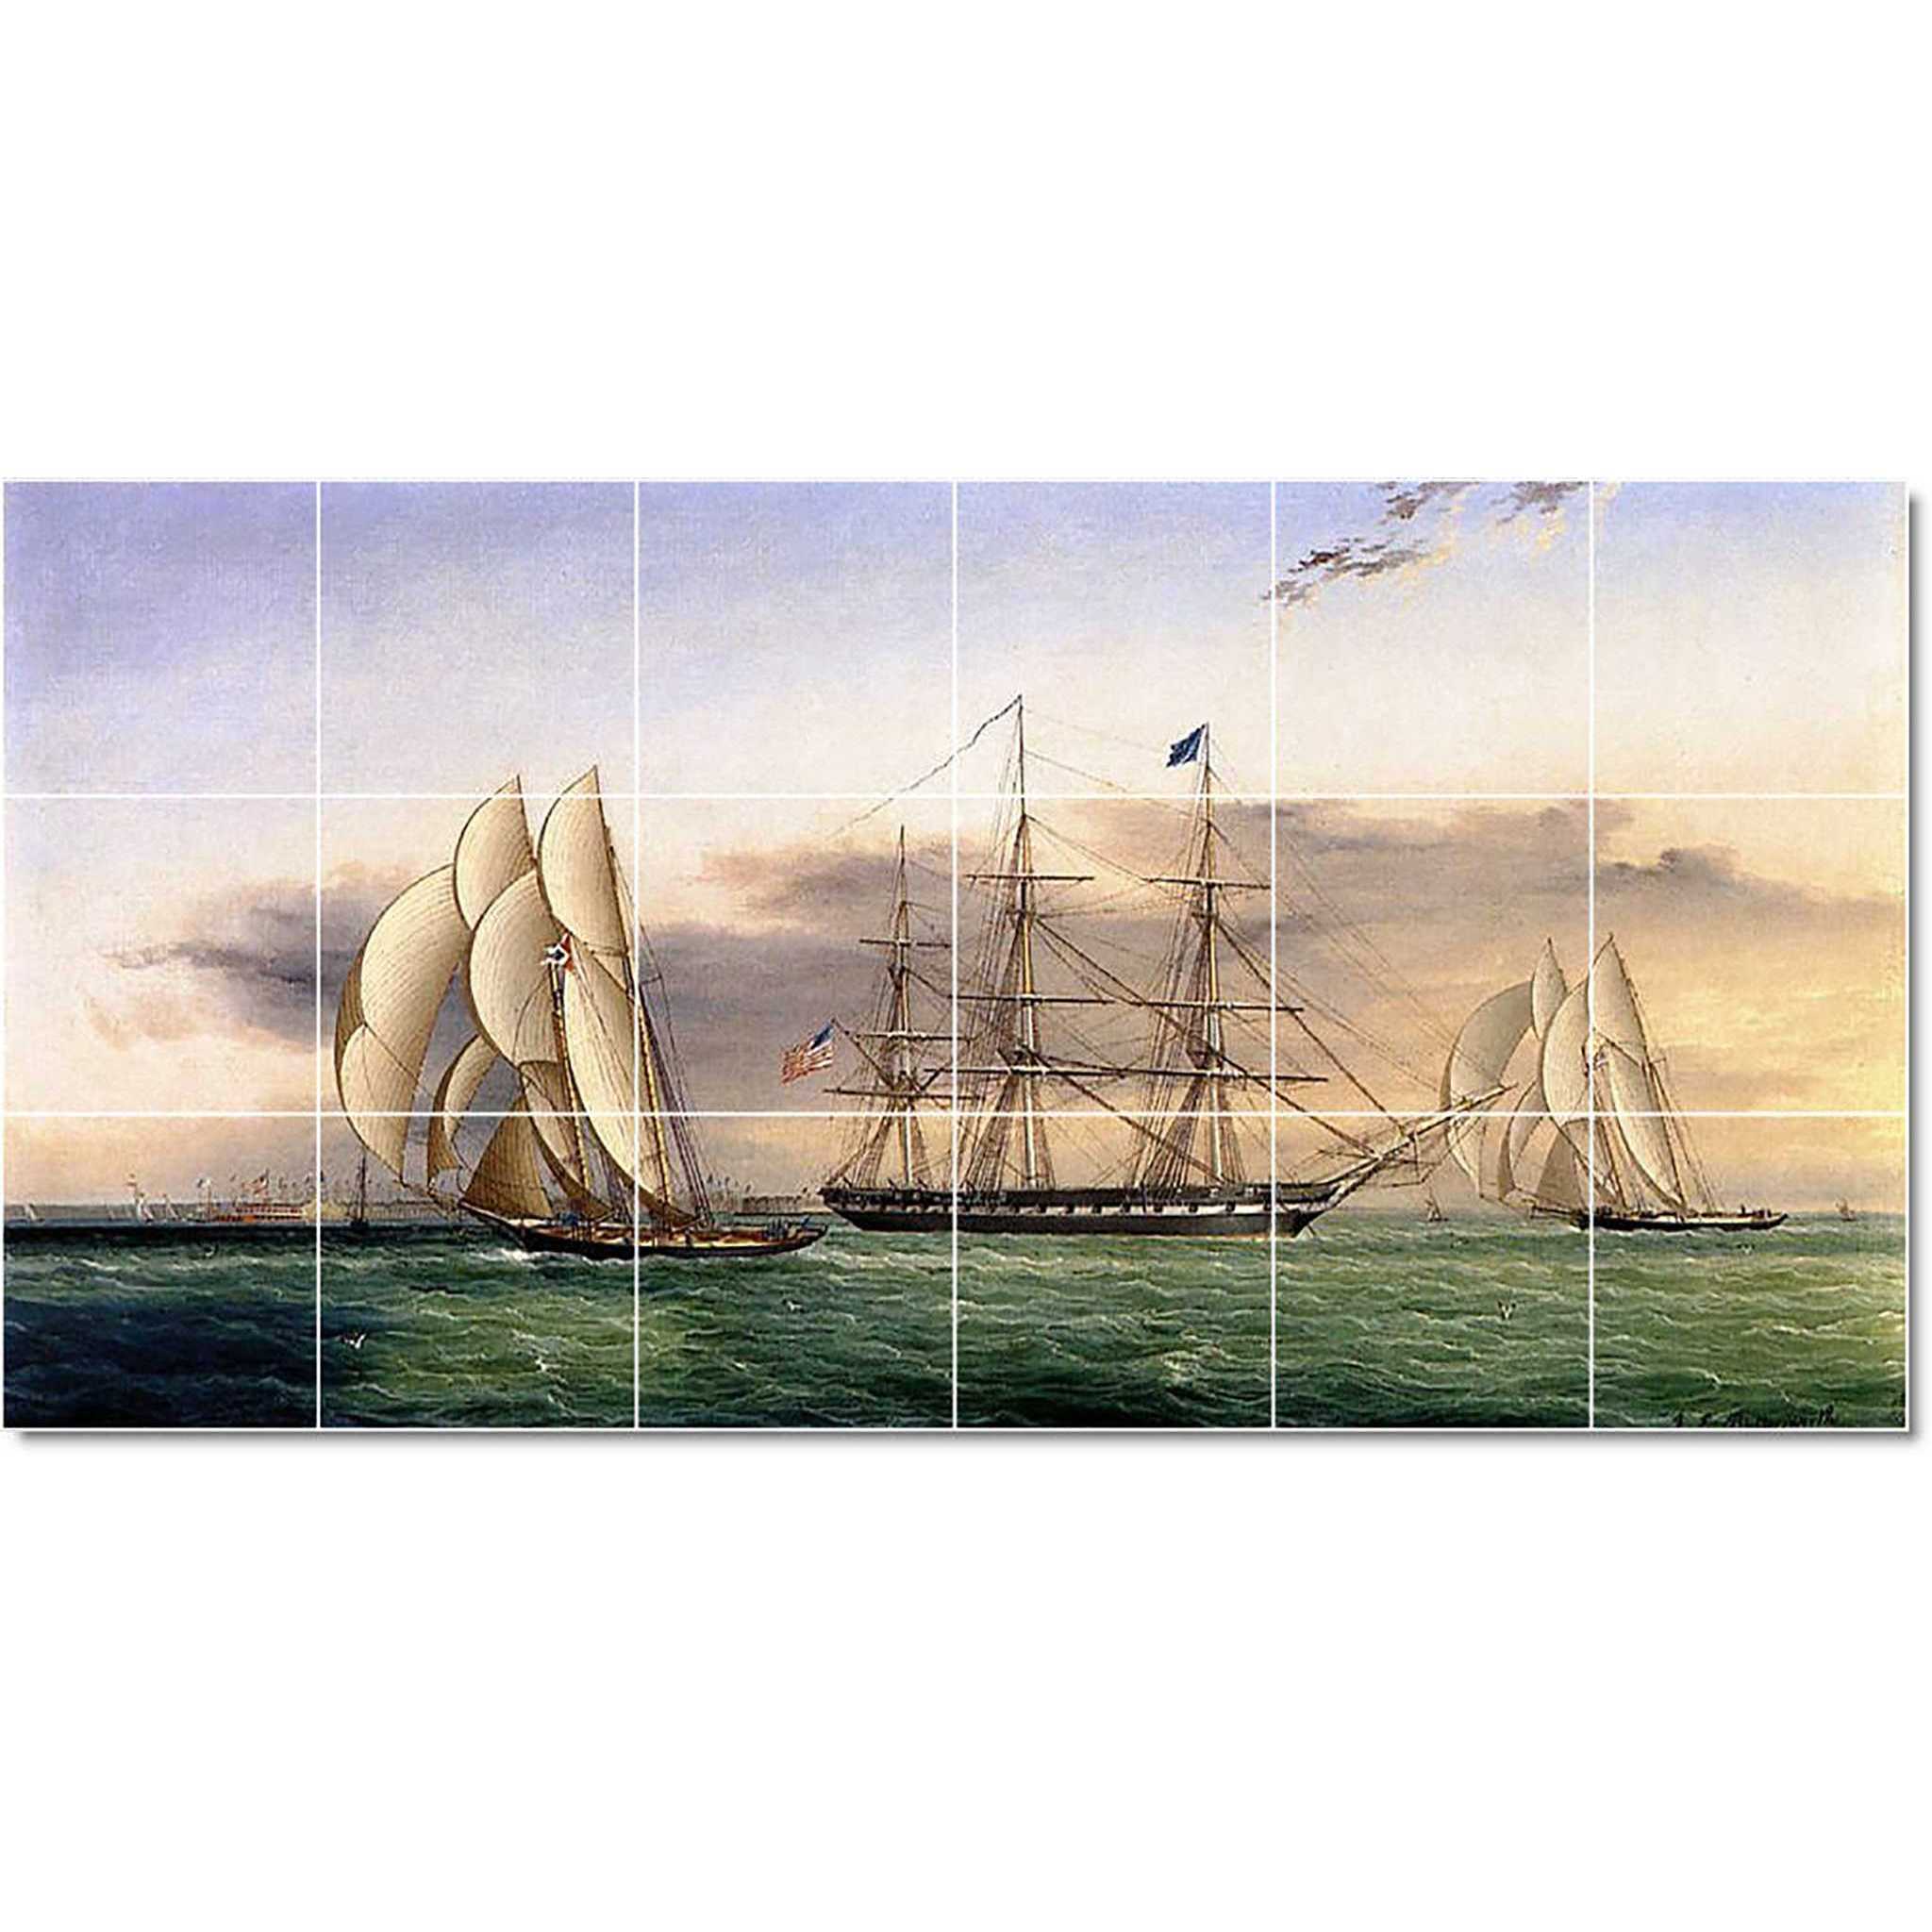 james buttersworth boat ship painting ceramic tile mural p22186